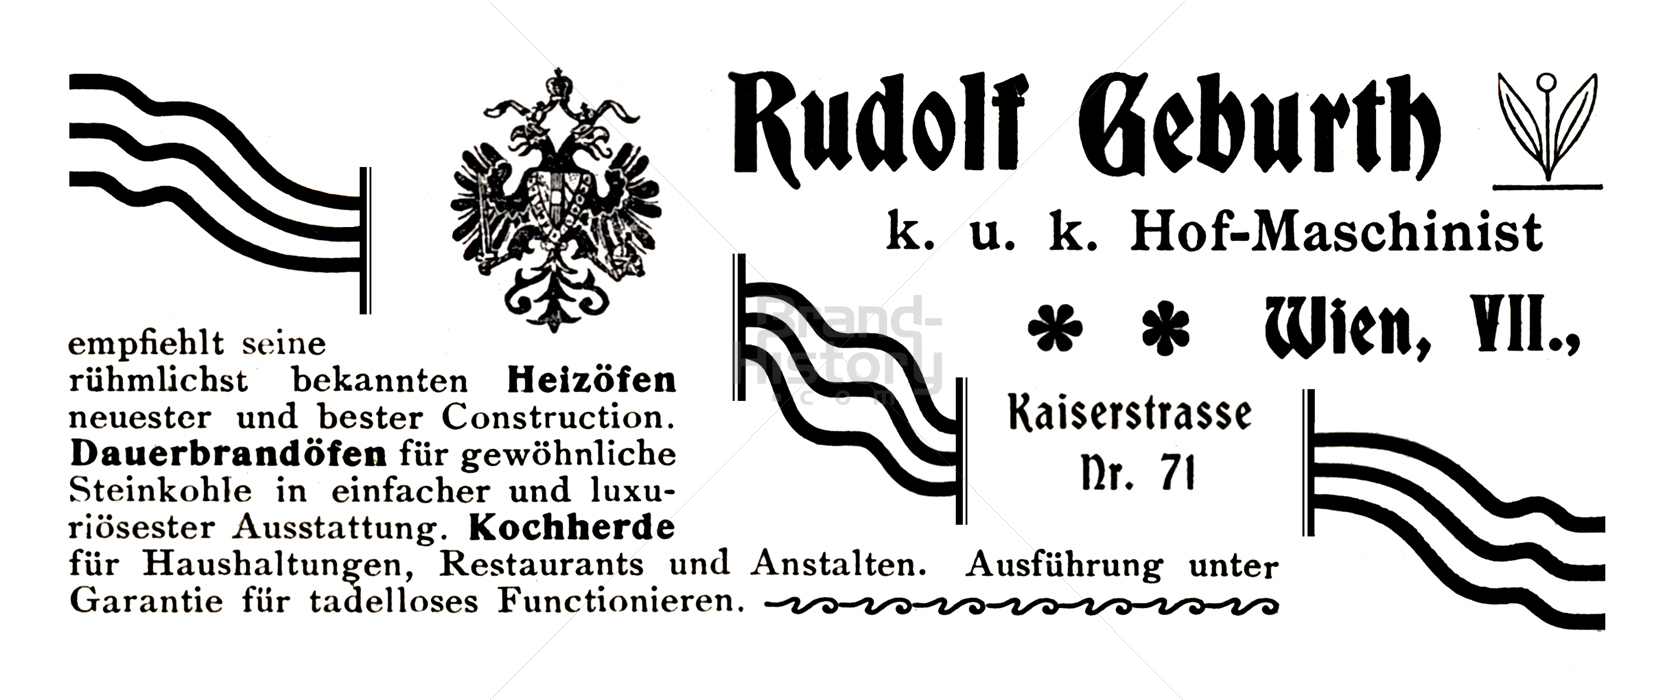 Rudolf Geburth, Wien